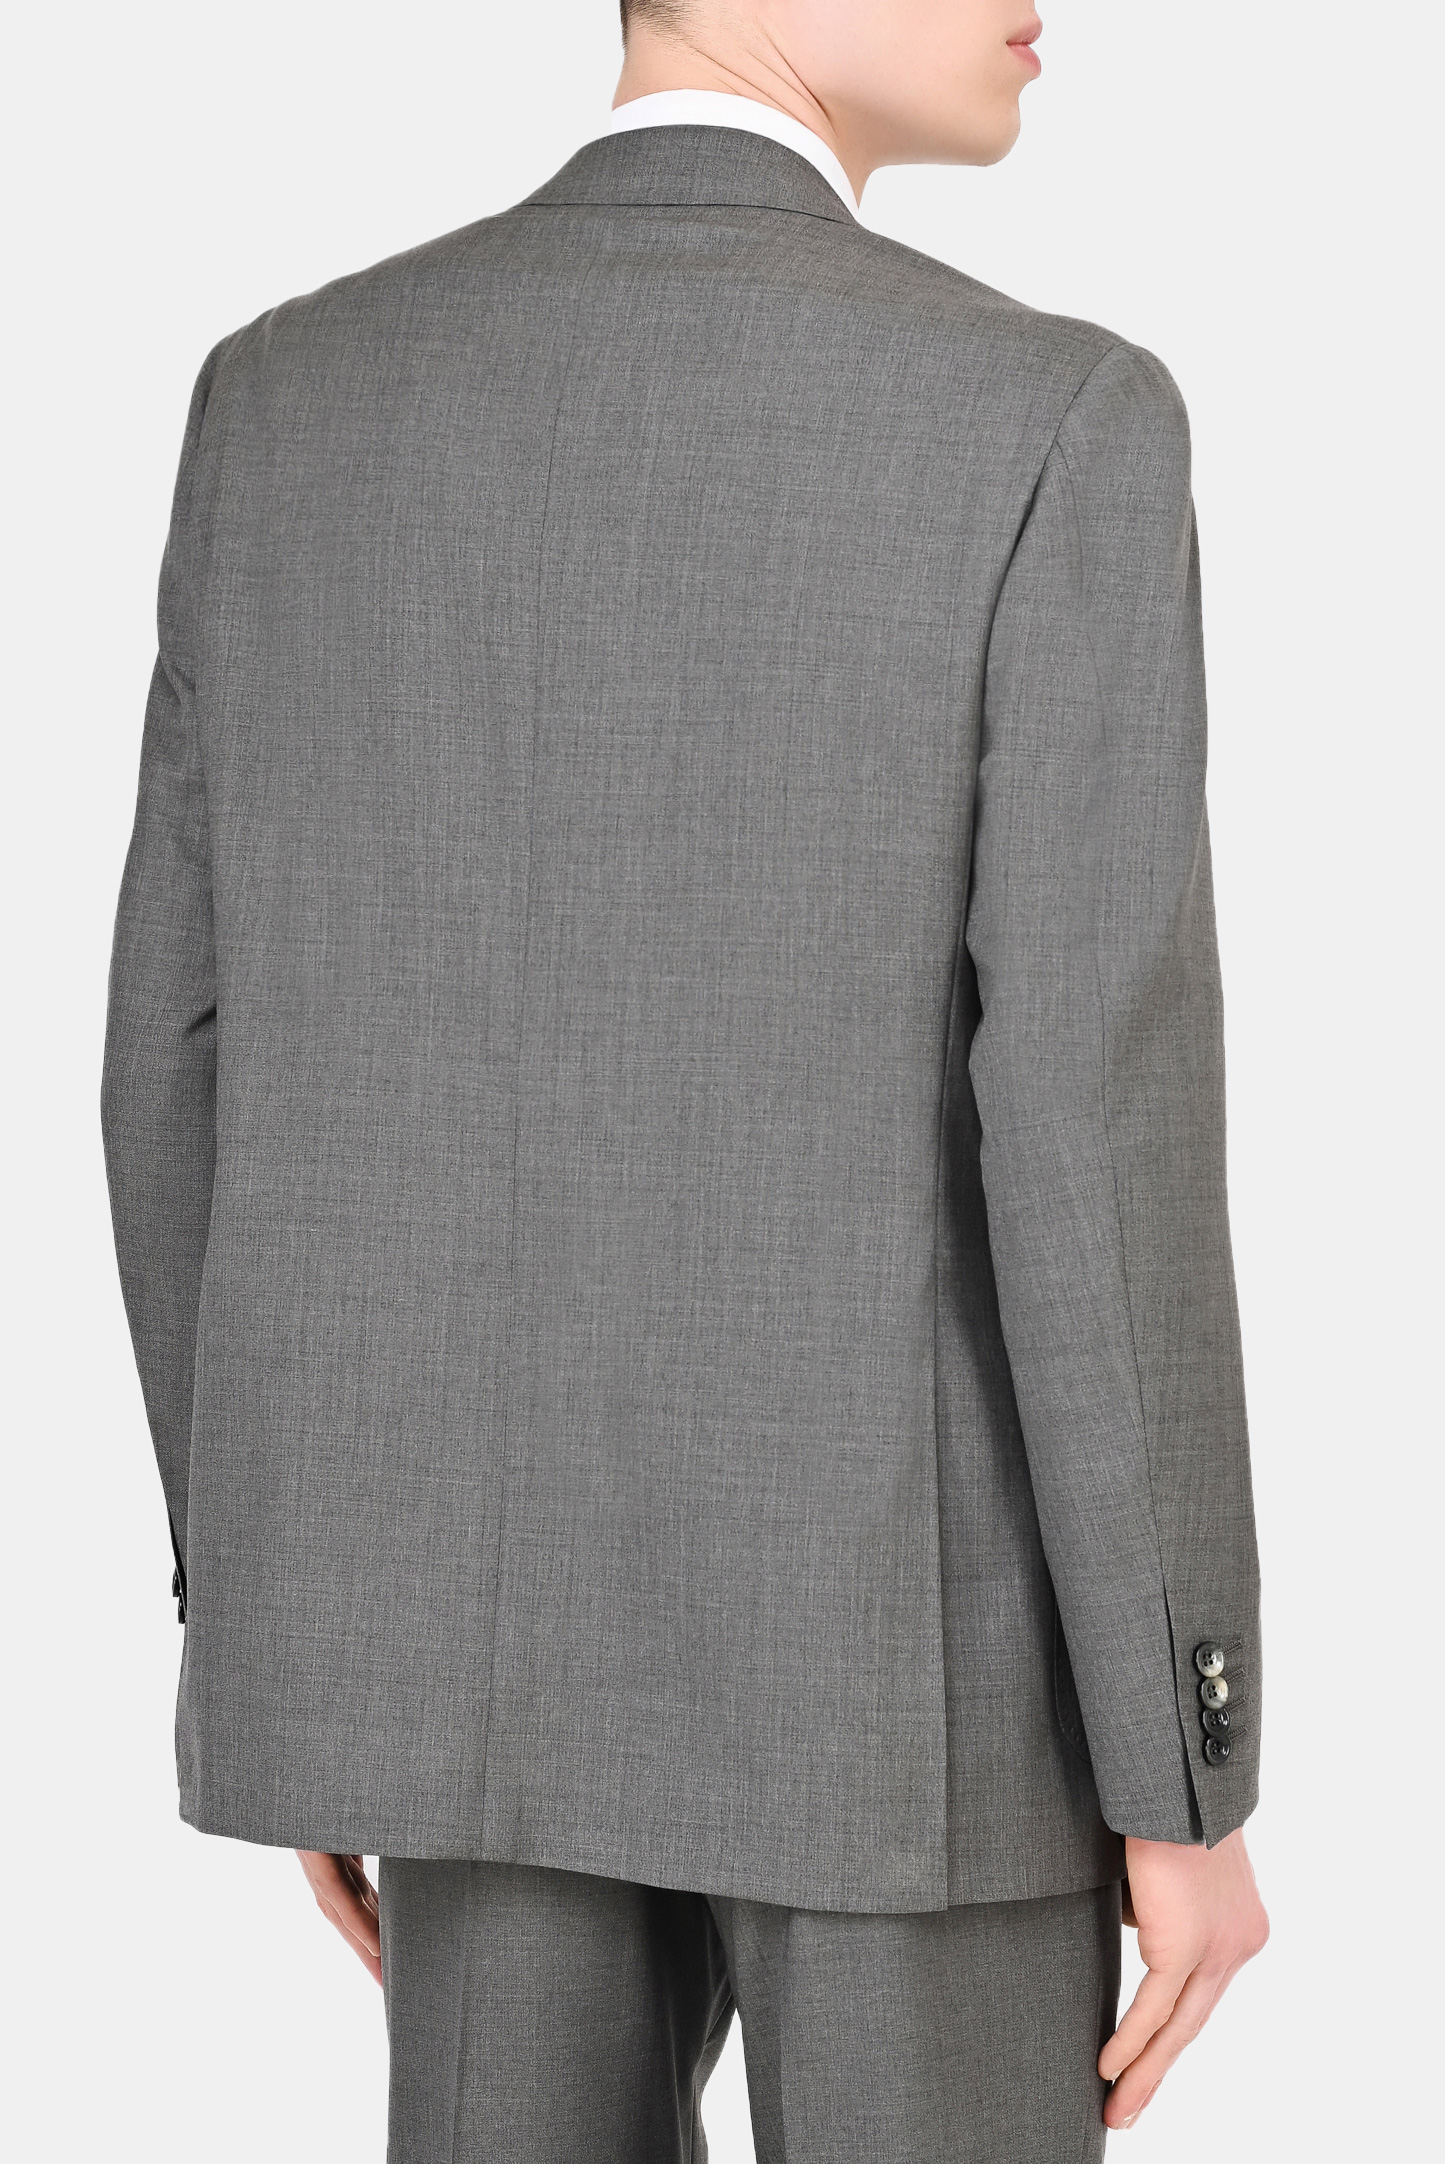 Пиджак CANALI AR03652 23275L/7R, цвет: Серый, Мужской